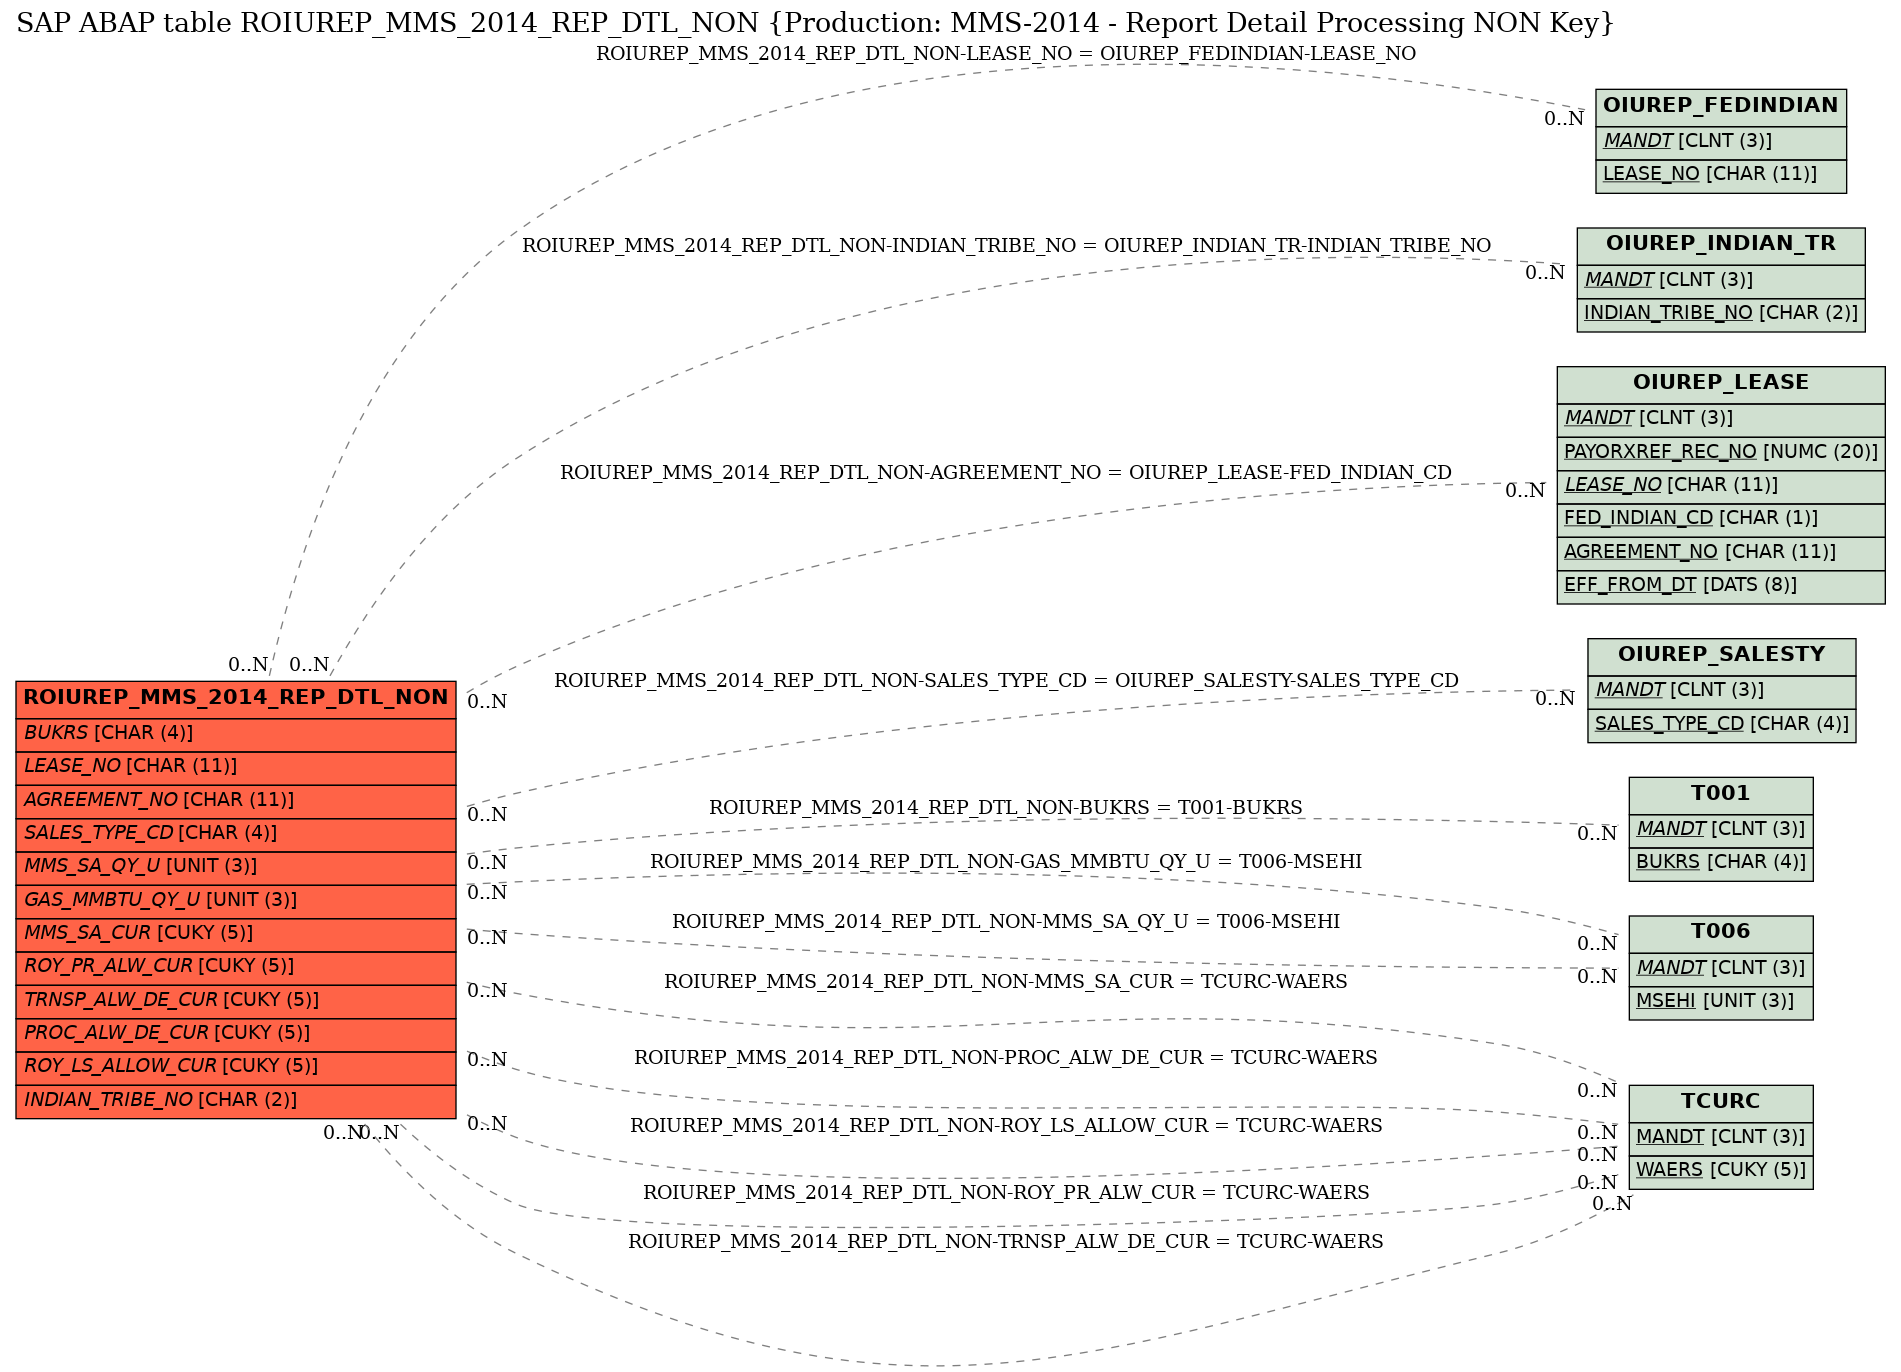 E-R Diagram for table ROIUREP_MMS_2014_REP_DTL_NON (Production: MMS-2014 - Report Detail Processing NON Key)